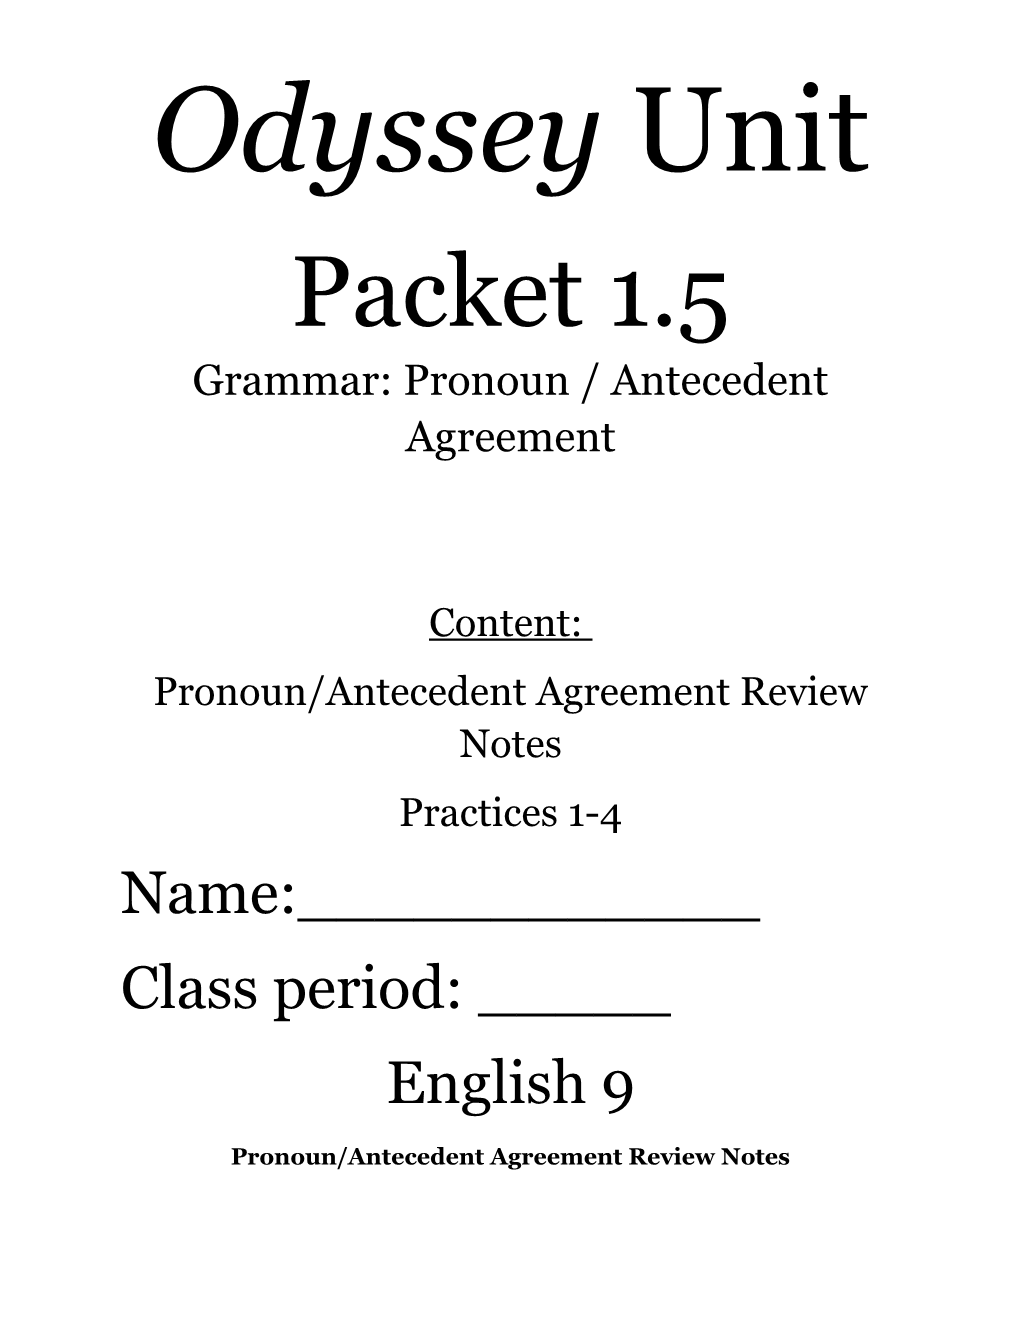 Pronoun/Antecedent Agreement Review Notes